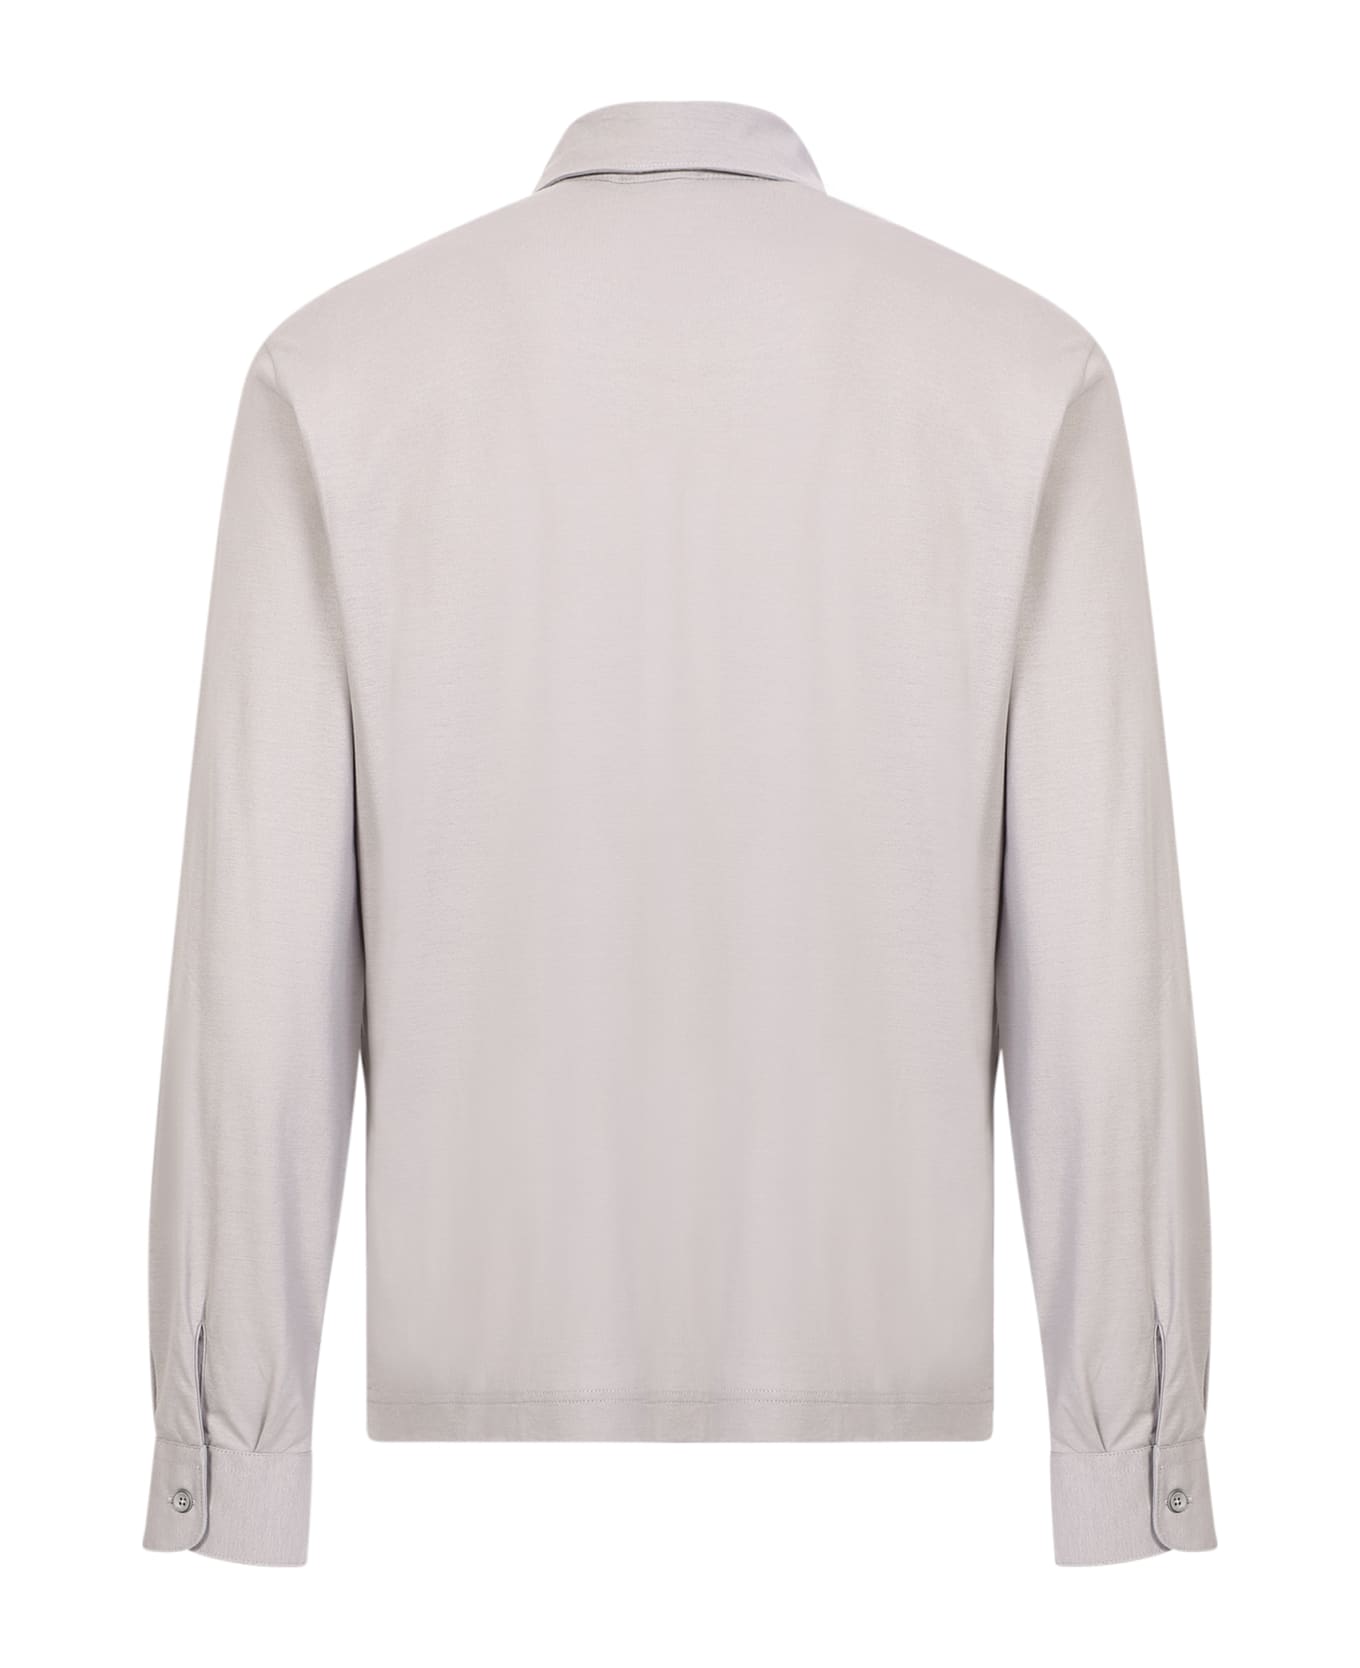 Herno Grey Jersey Polo Shirt - Grey